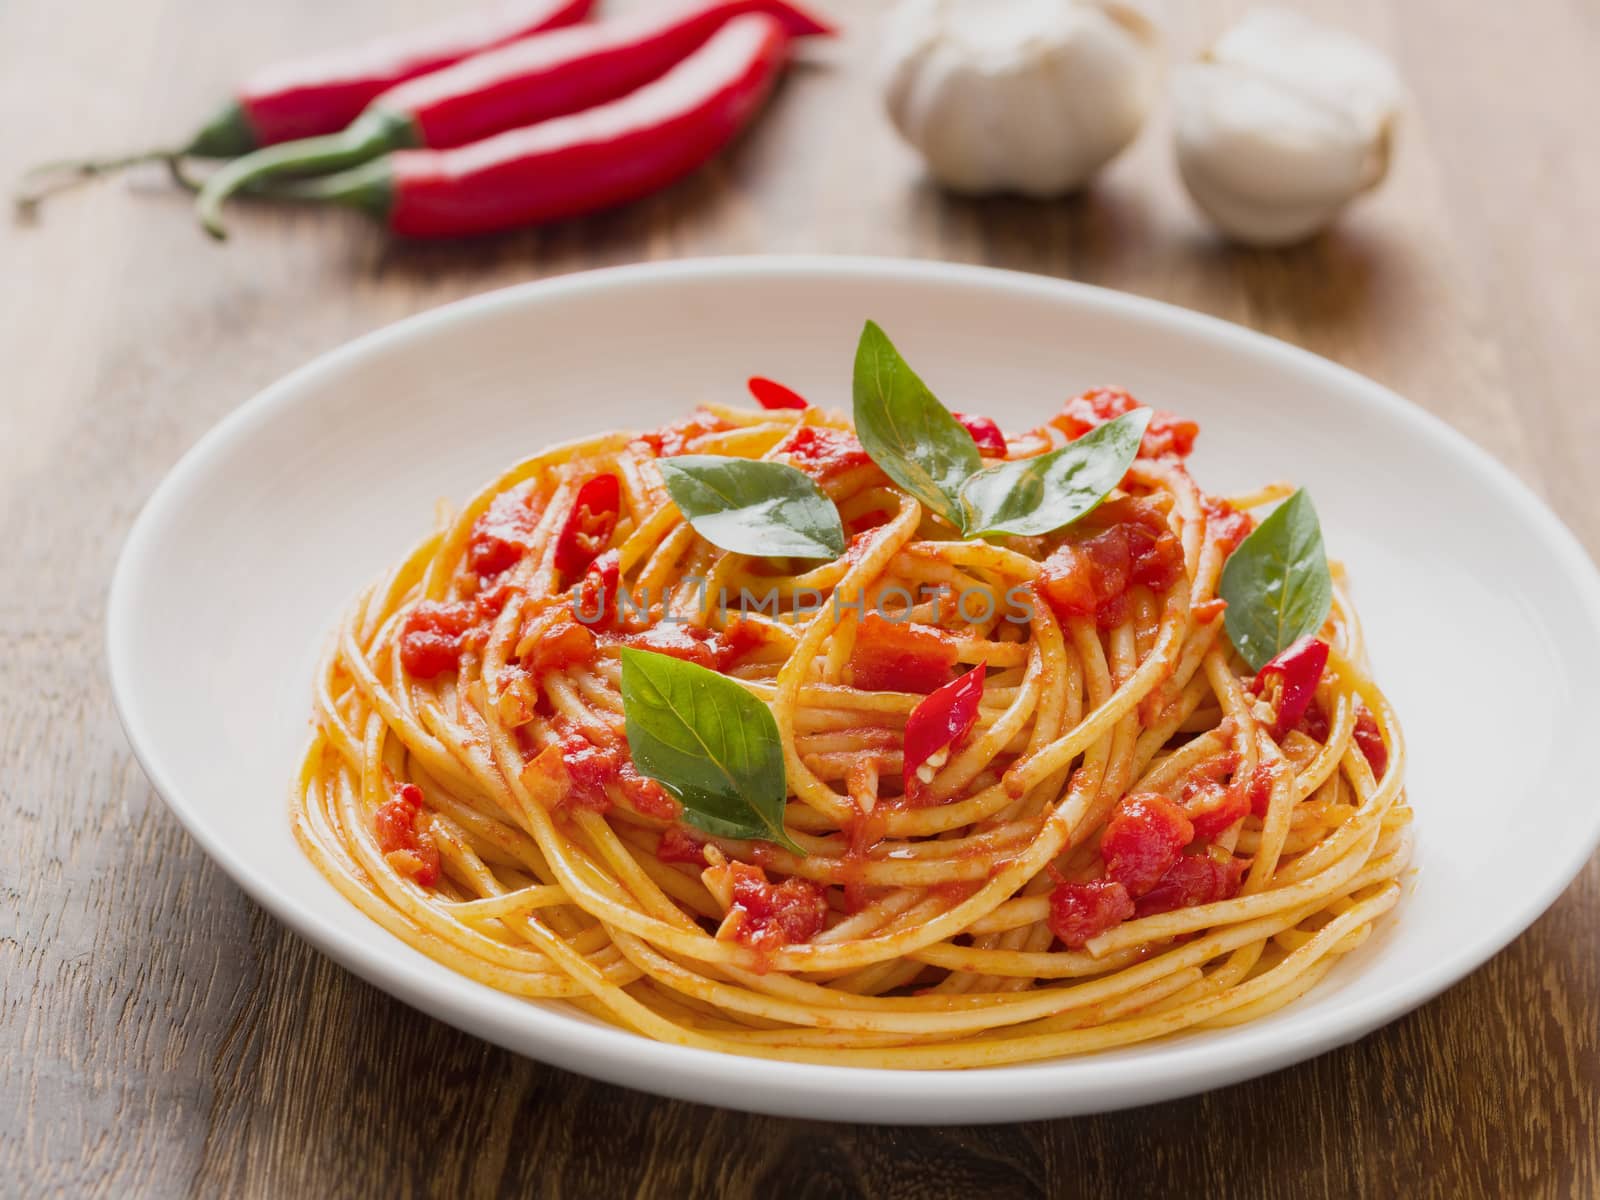 close up of rustic italian spaghetti arrabbiata pasta